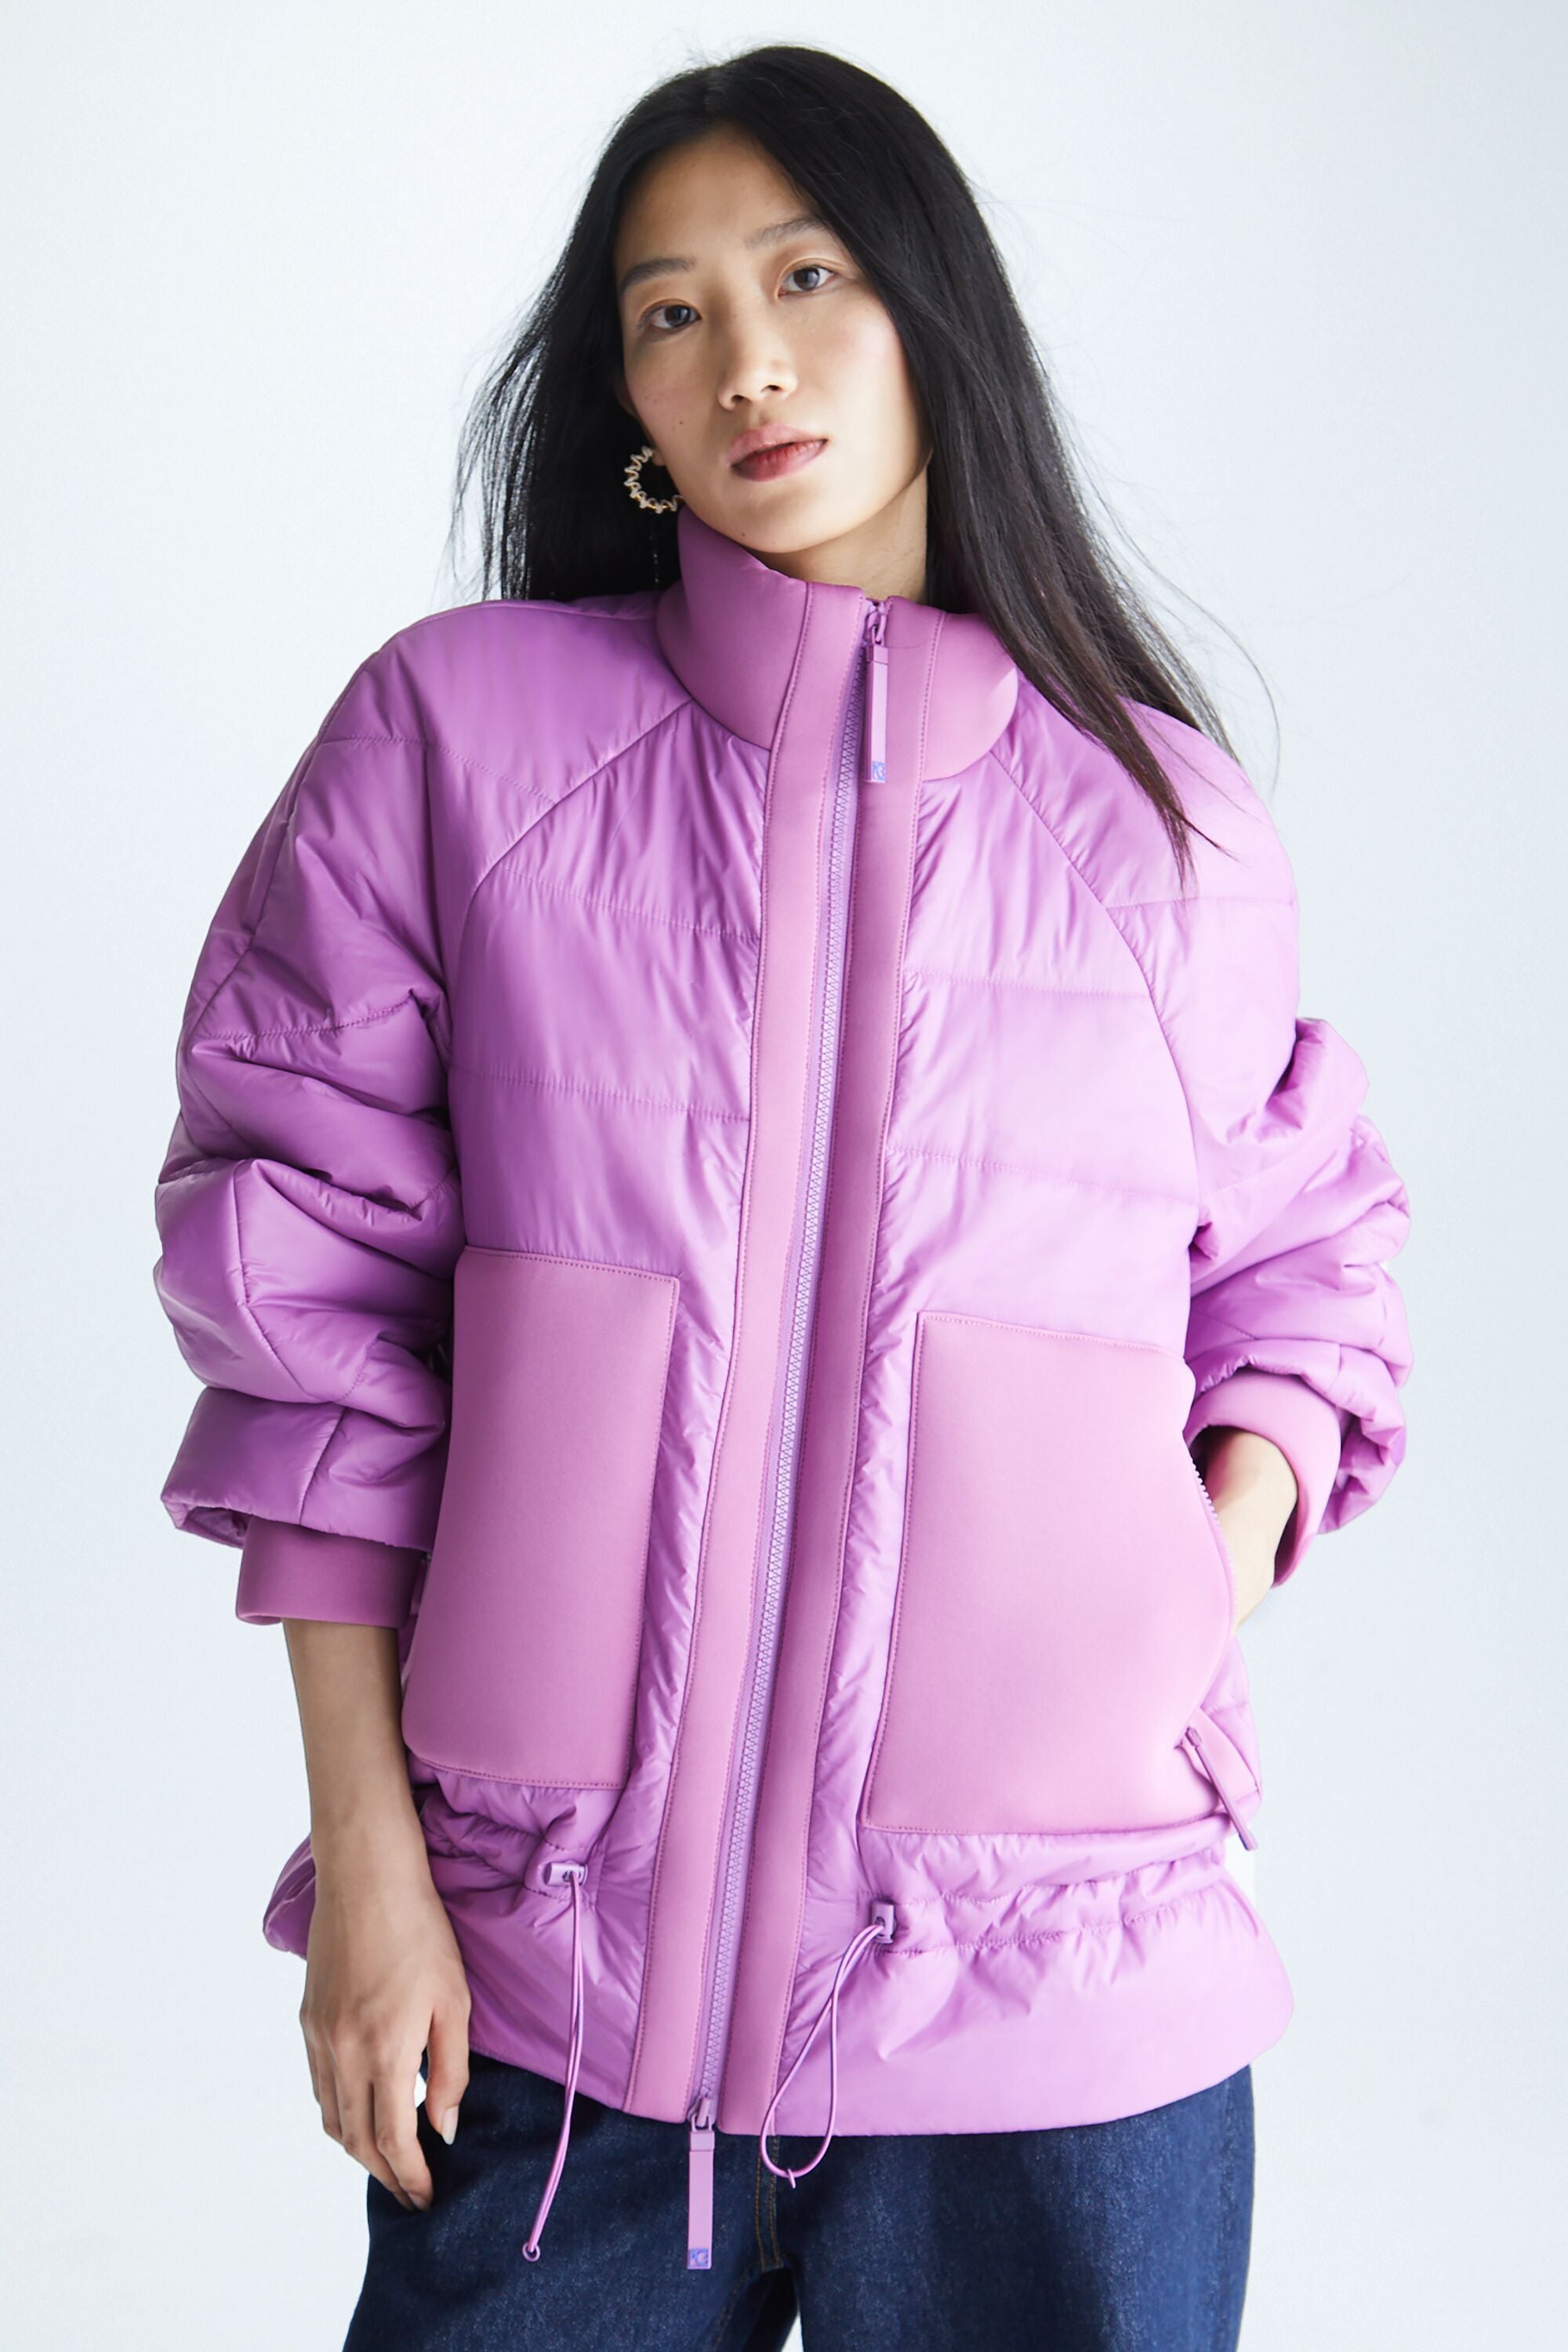 Cocoon neoprene and nylon Garcia Purificacion - Belgium pink jacket